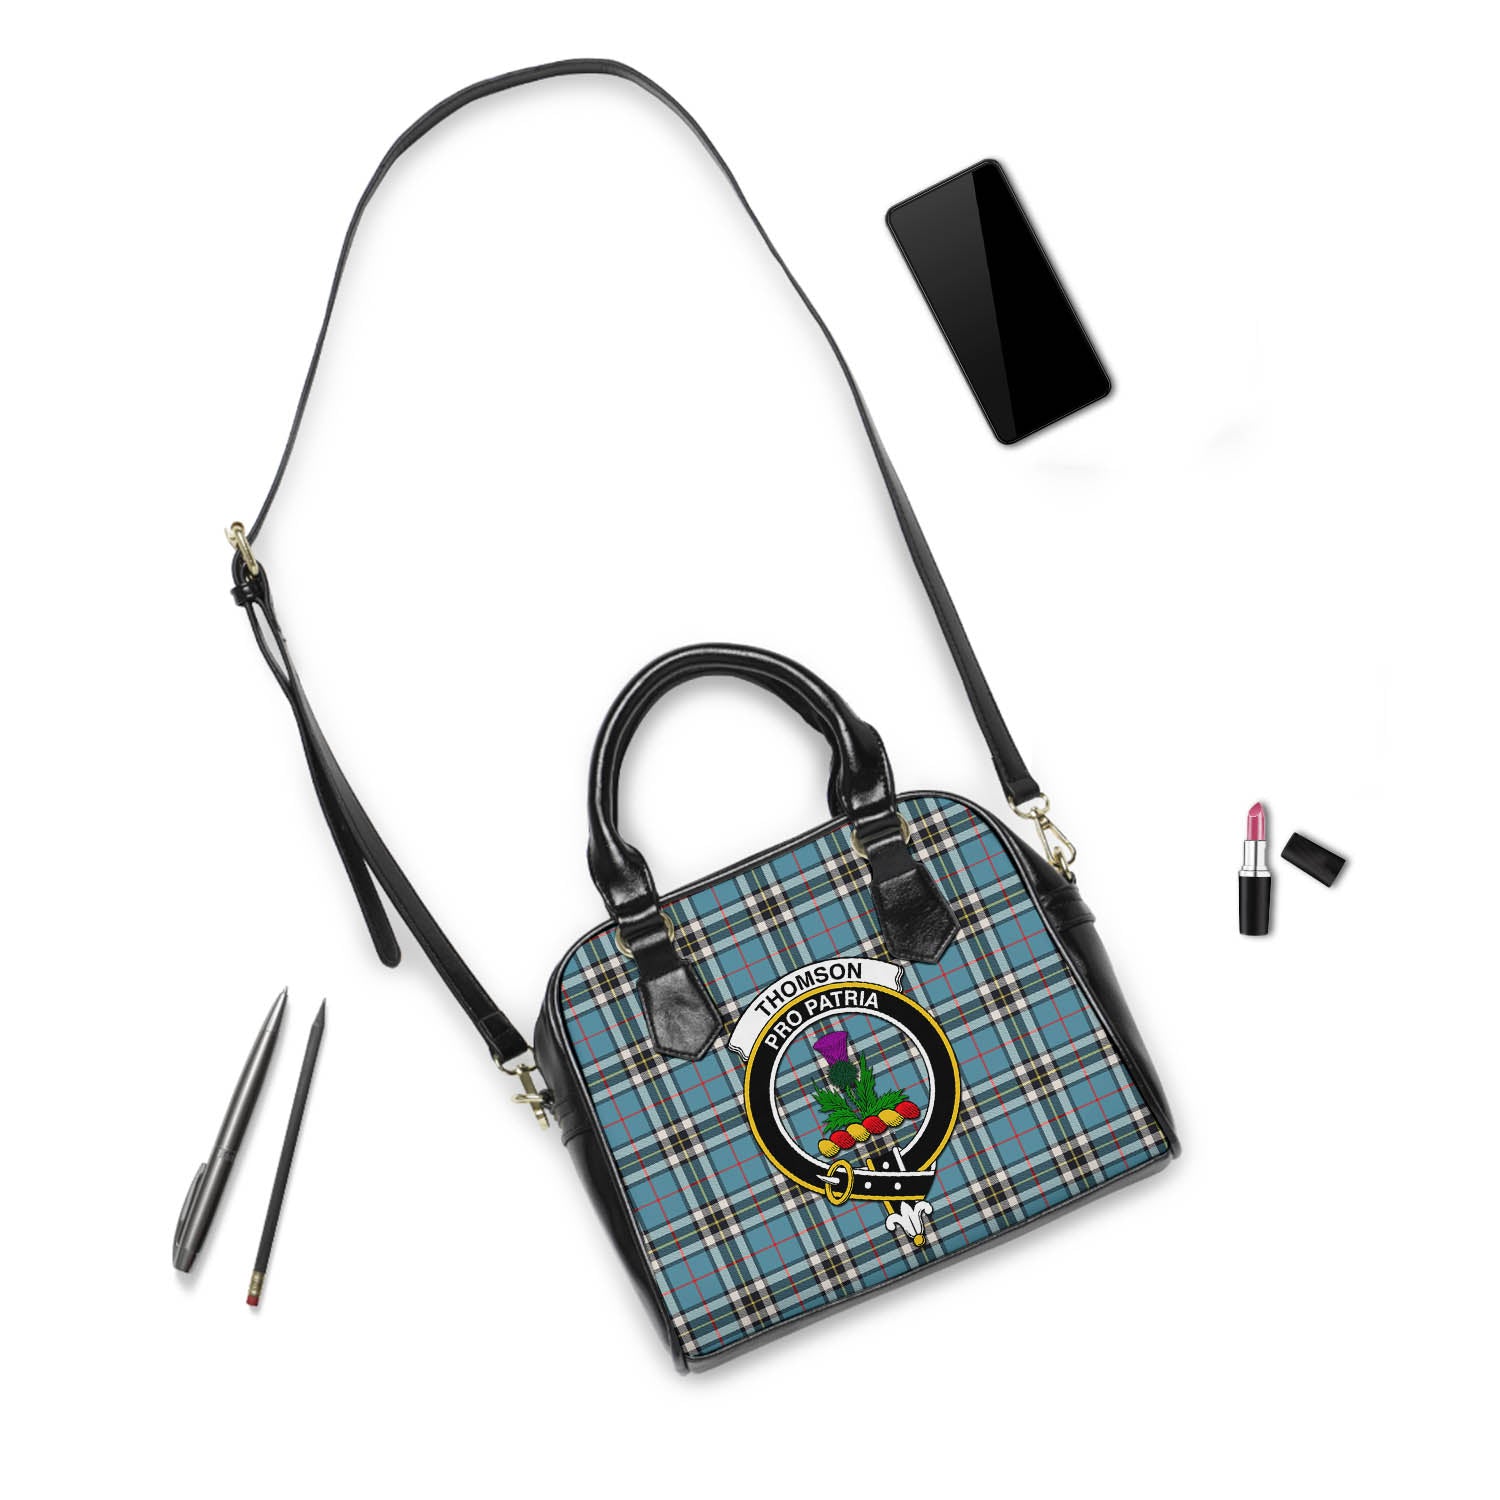 Thomson Tartan Shoulder Handbags with Family Crest - Tartanvibesclothing